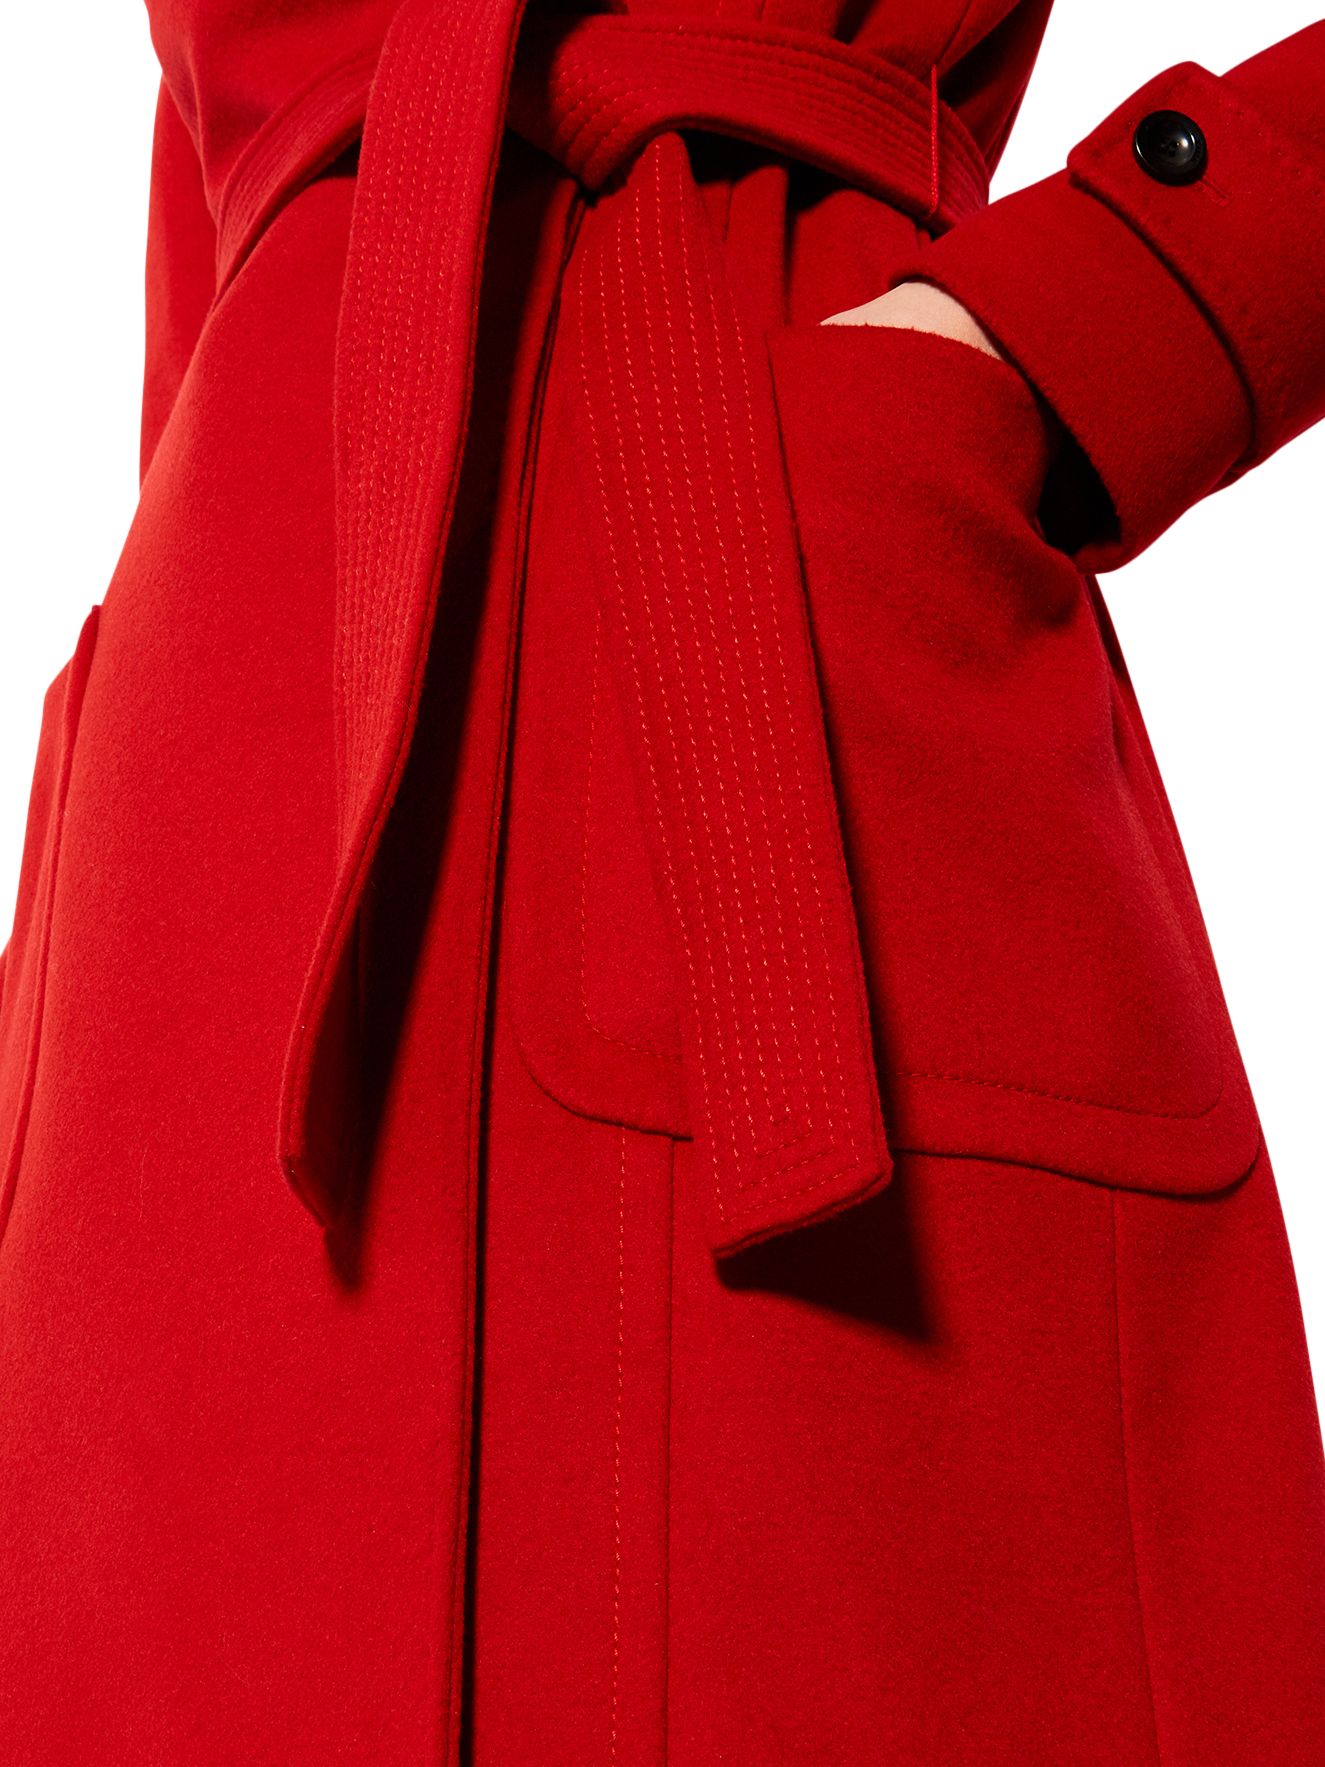 Karen Millen Investment Wool Coat, Red at John Lewis & Partners